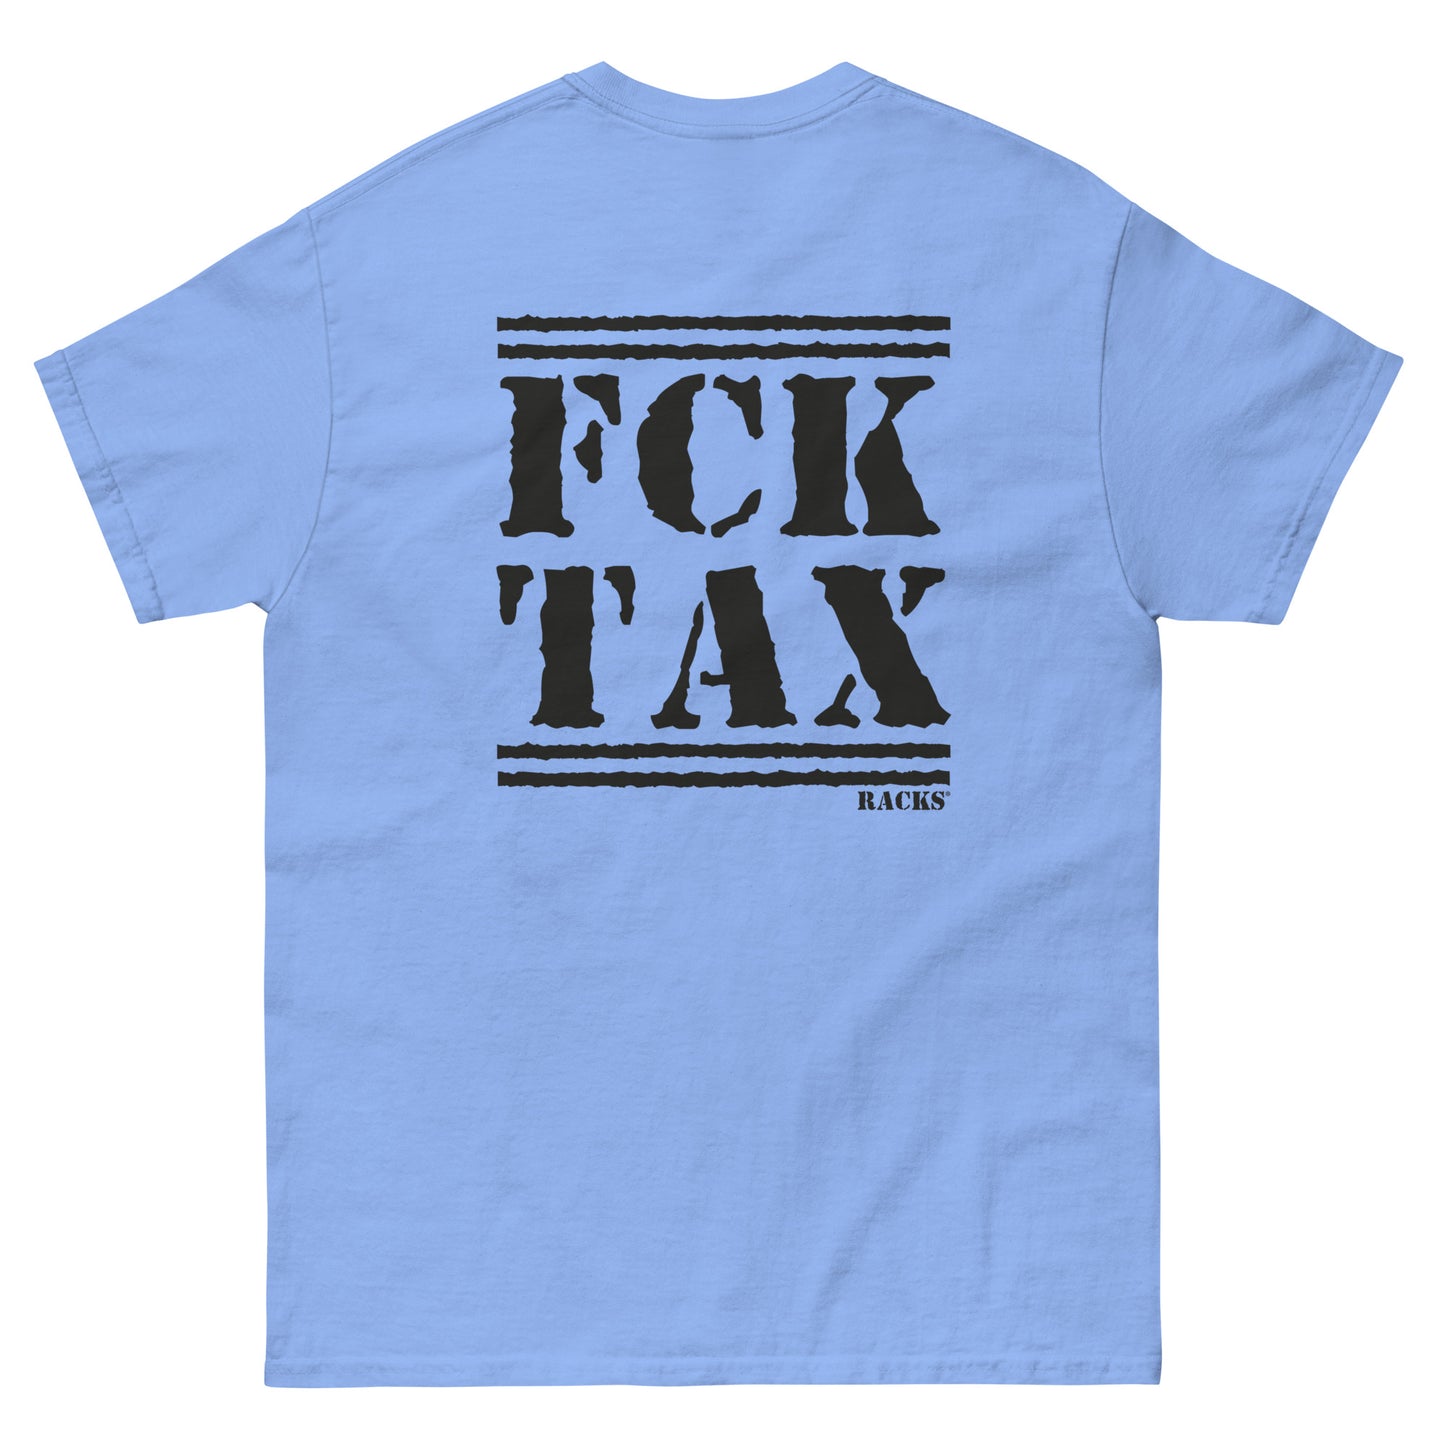 Camiseta FCK TAX Army Negro